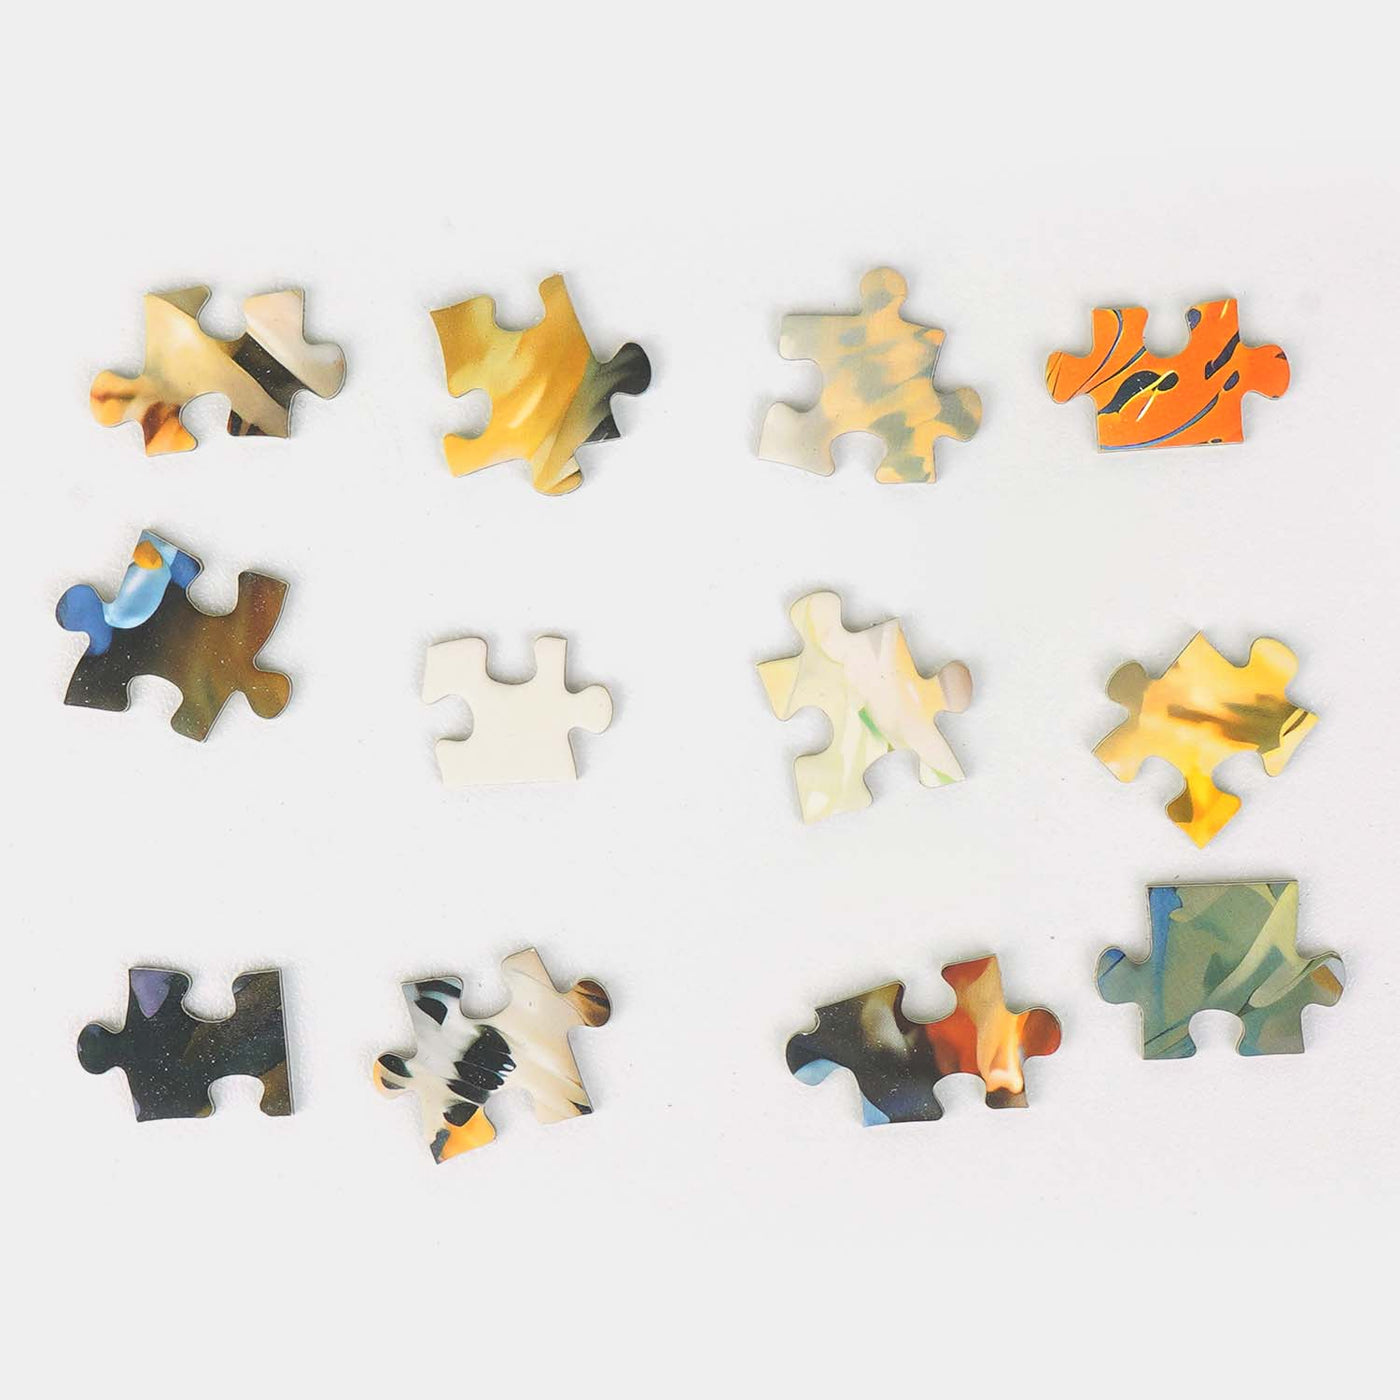 Tiger Velvet Jigsaw Puzzle 300Pcs